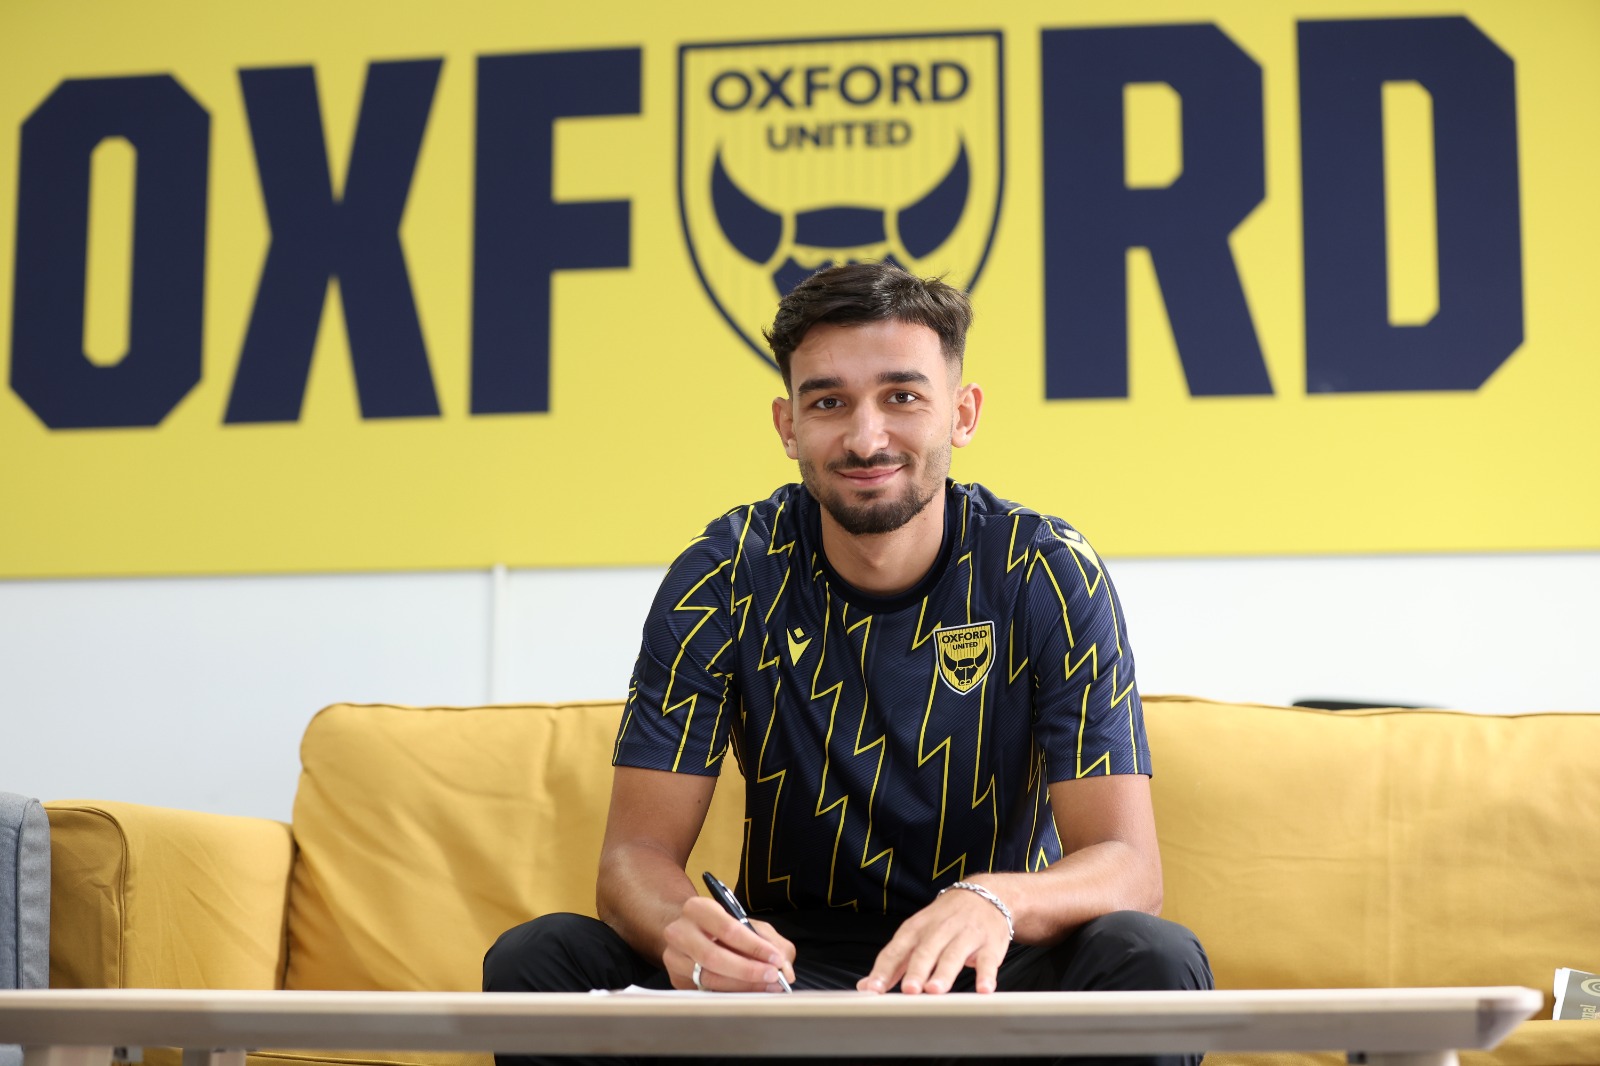 Idris El Mizouni on joining Oxford United and playing style